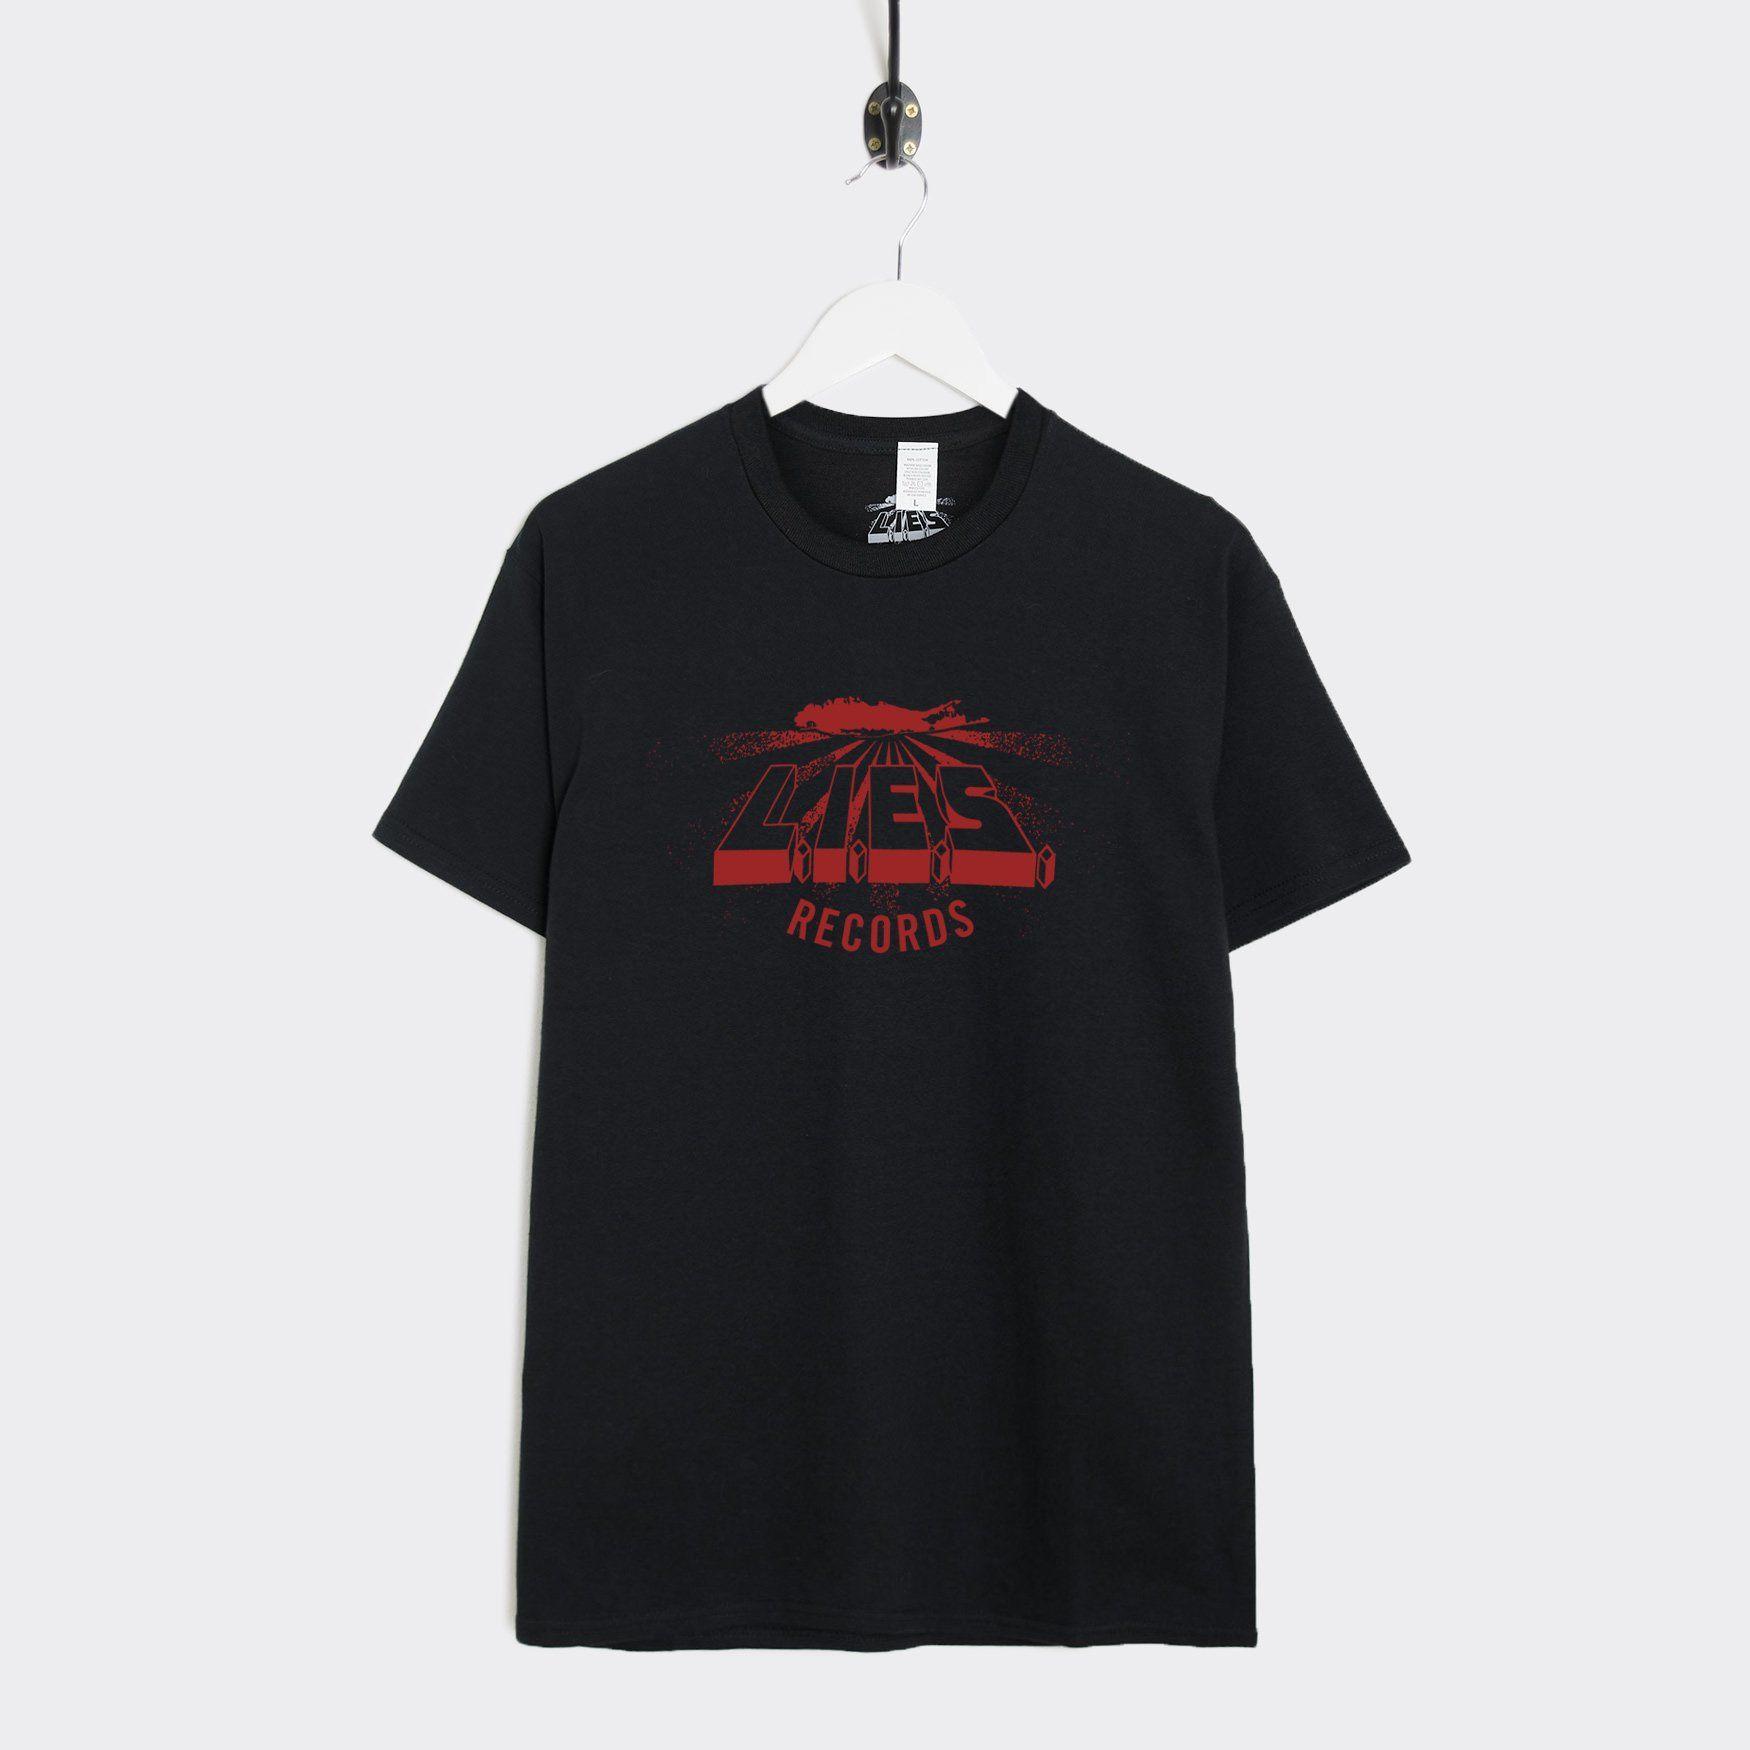 Black and Red T Logo - L.I.E.S Records Logo T-Shirt - Black/Red